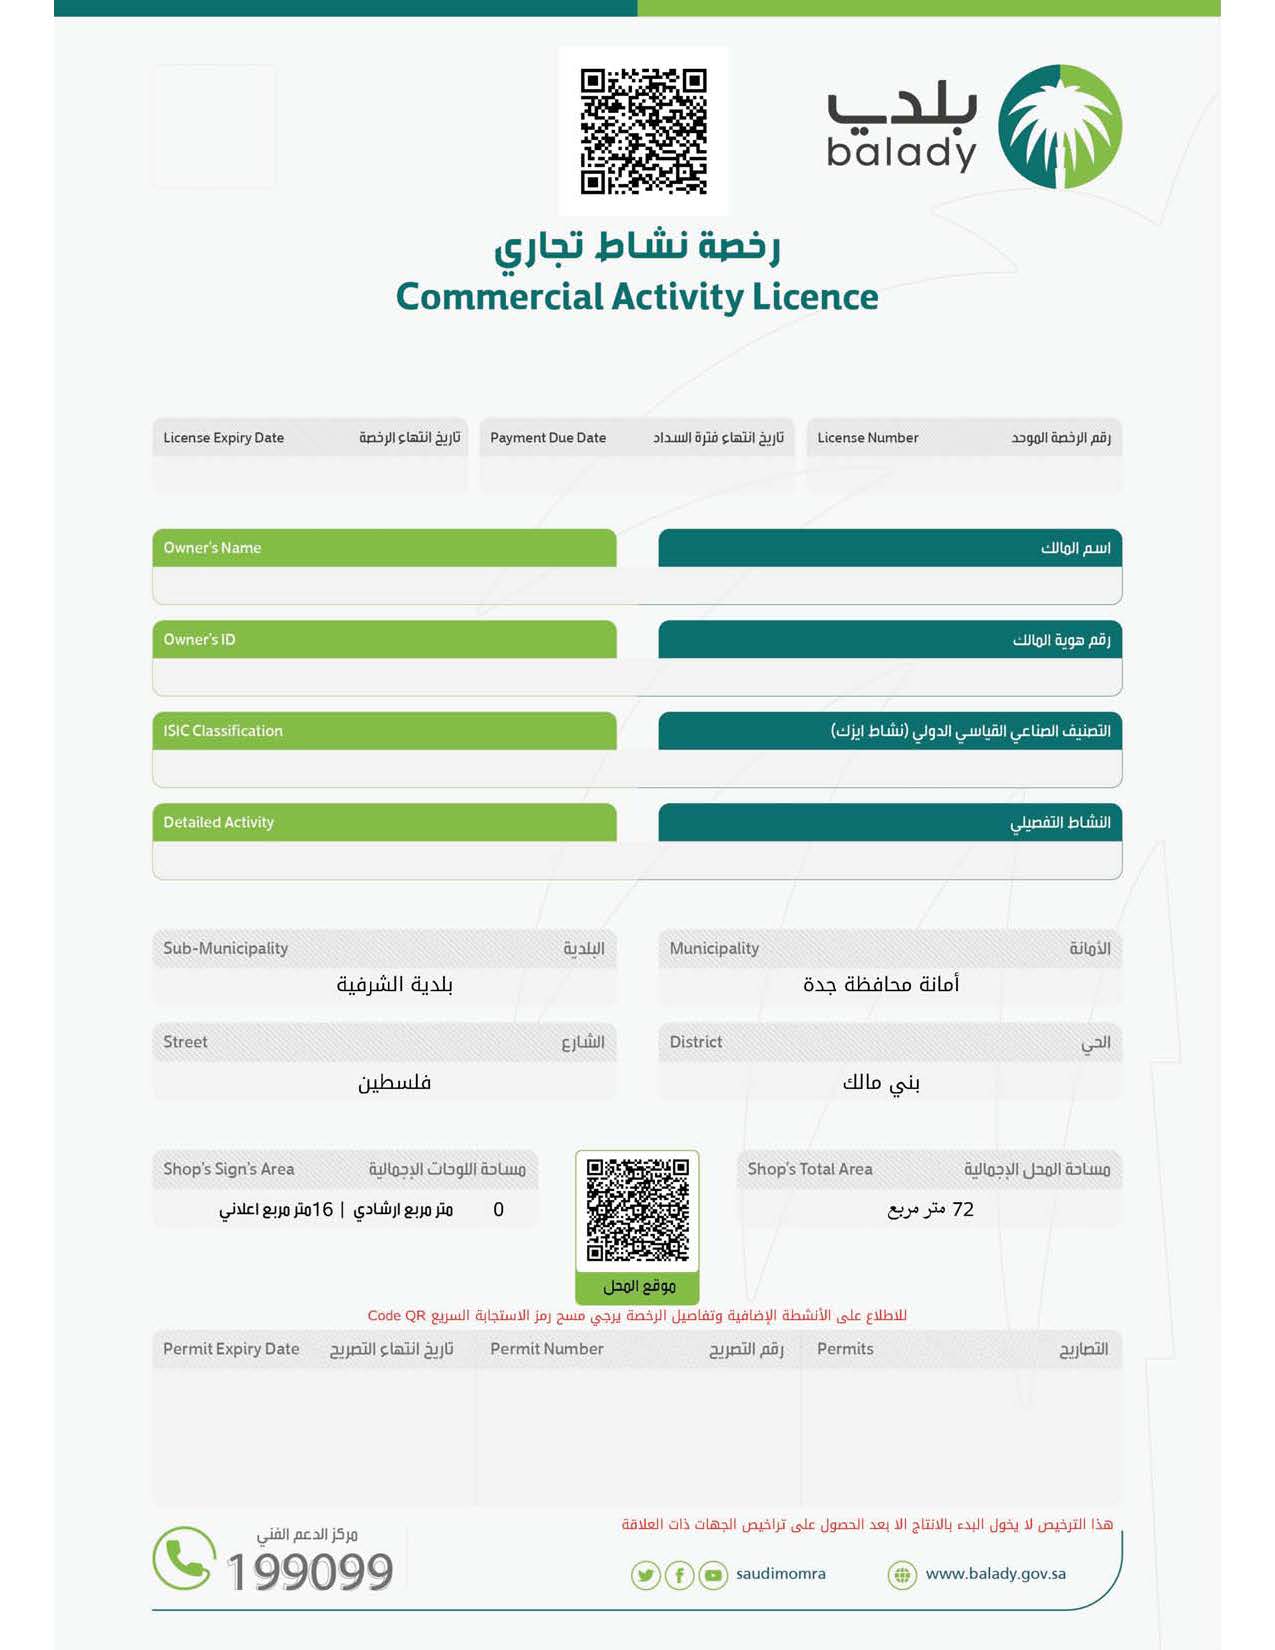 البلديات Page 10 One of the leading companies and a significant number in all its fields